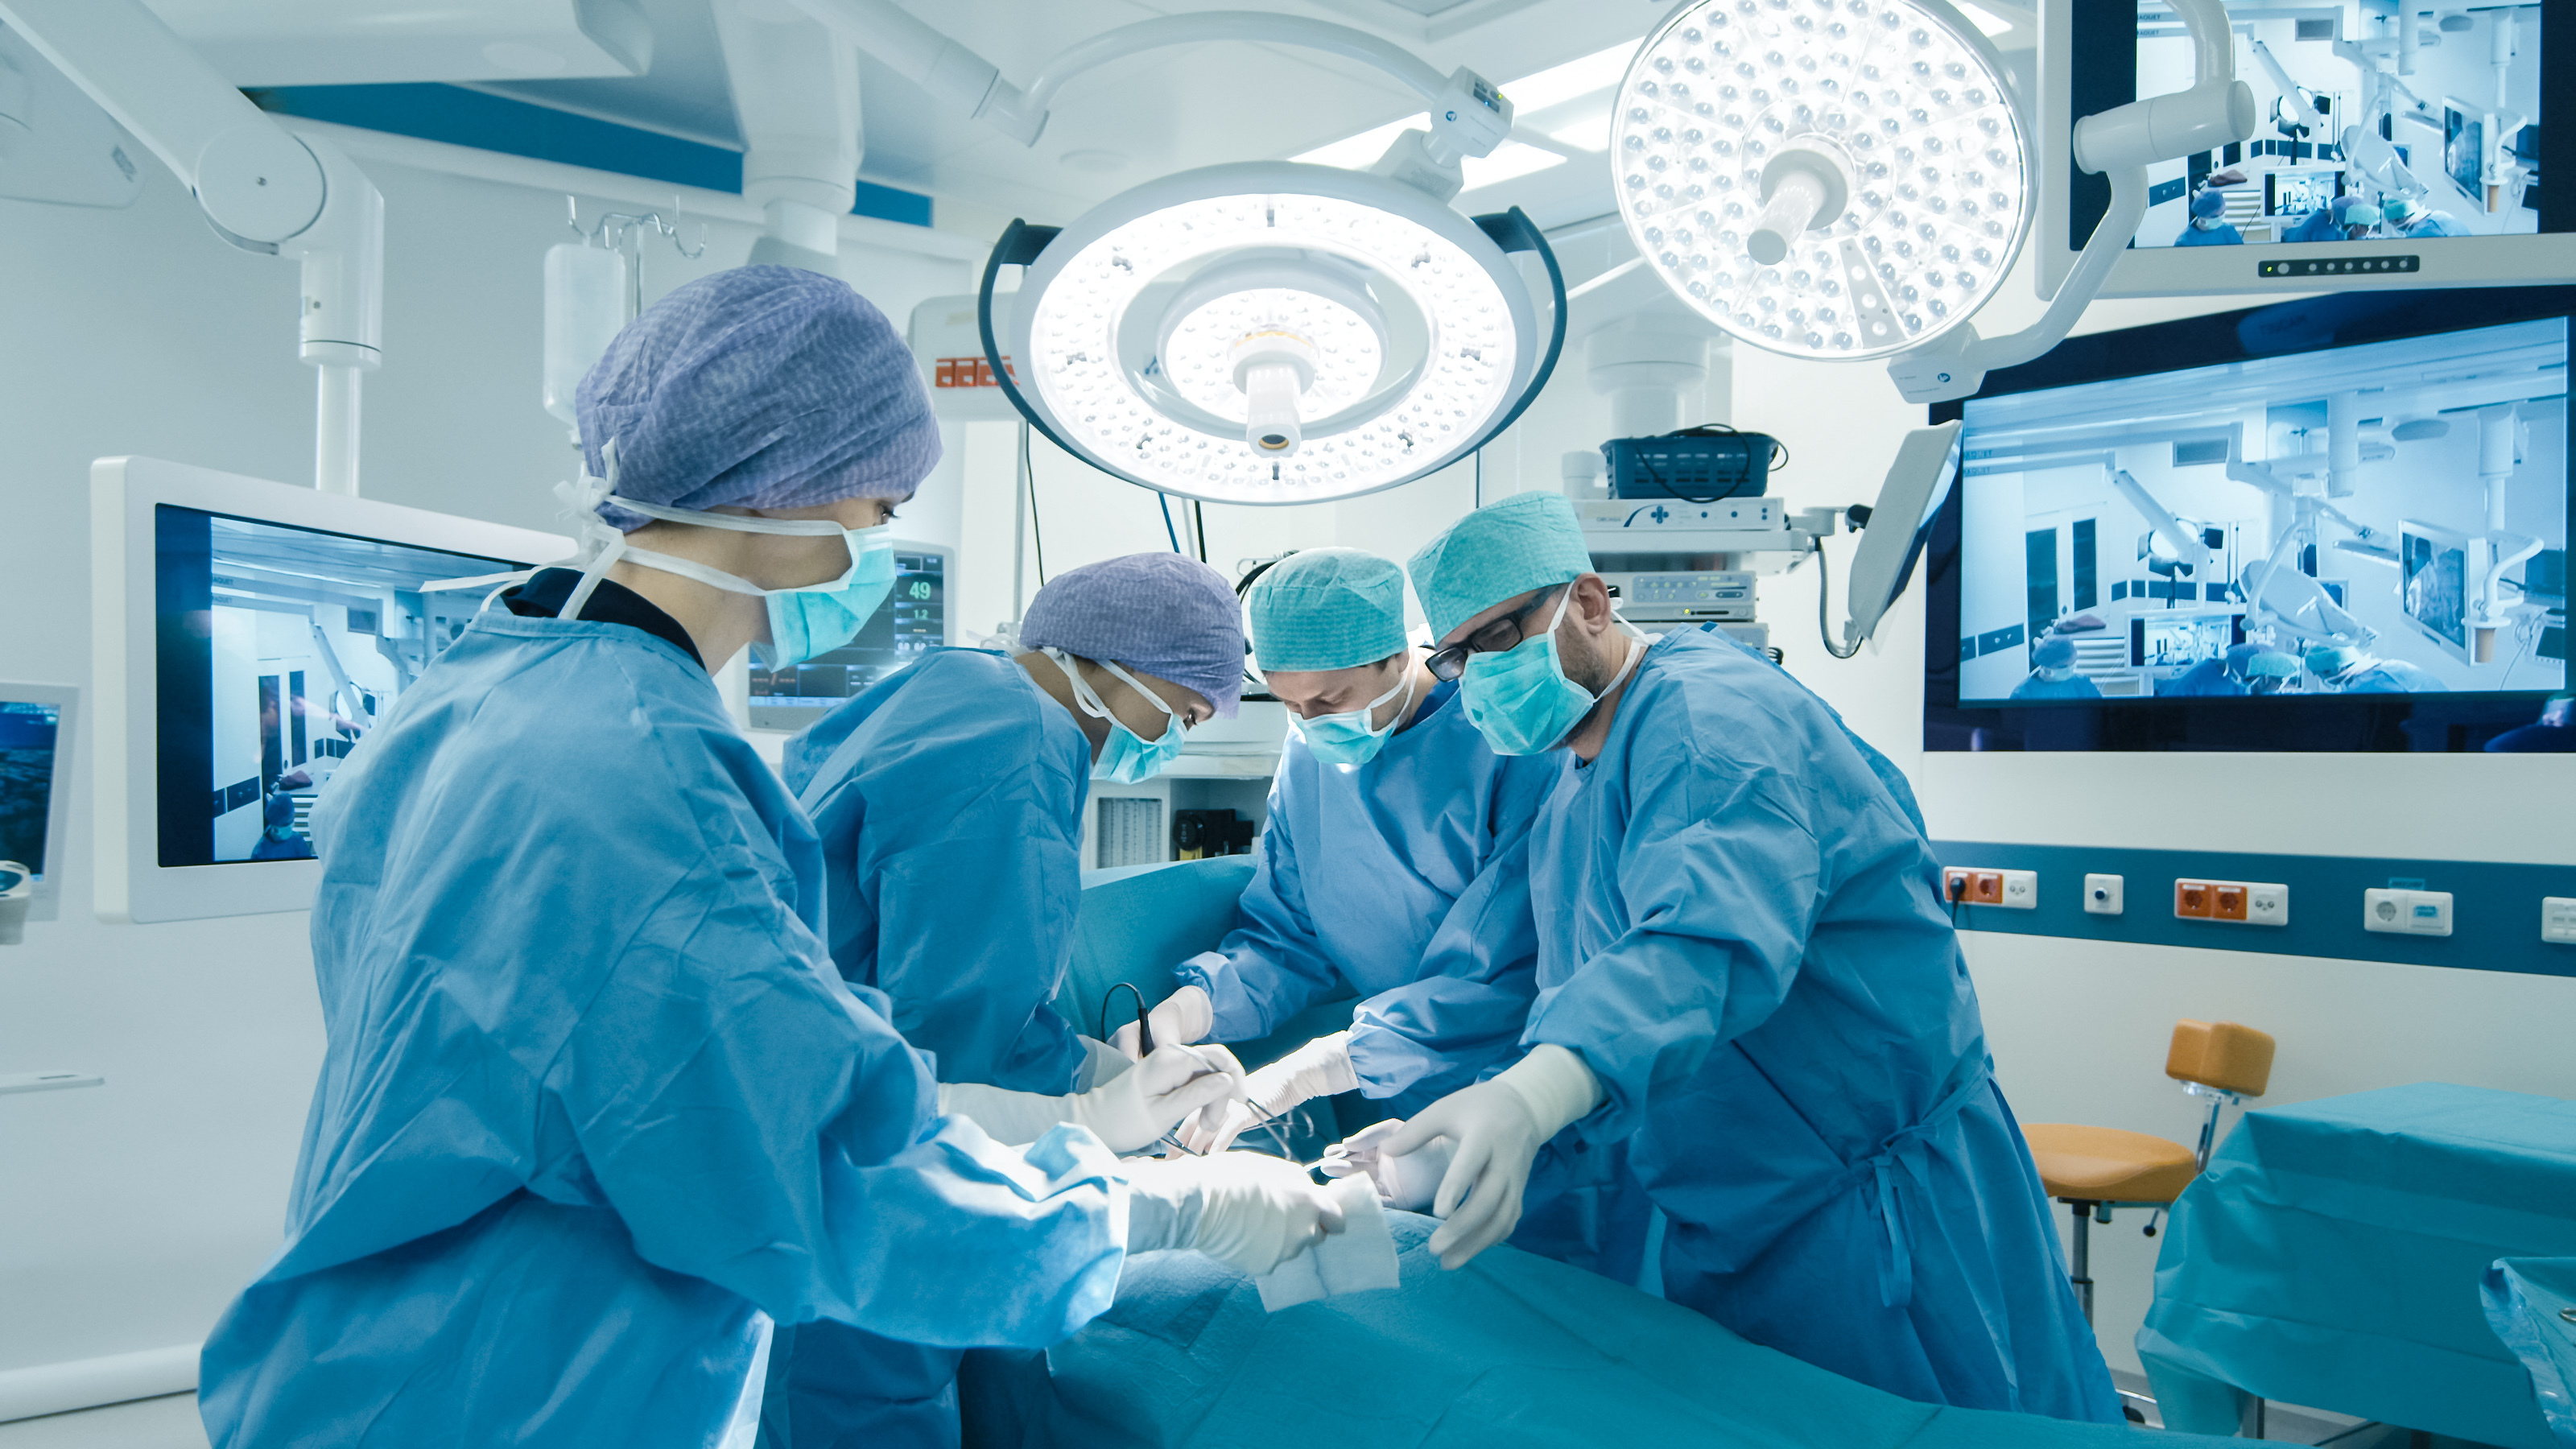 Doctors perform surgery. Shutterstock image via user Gorodenkoff